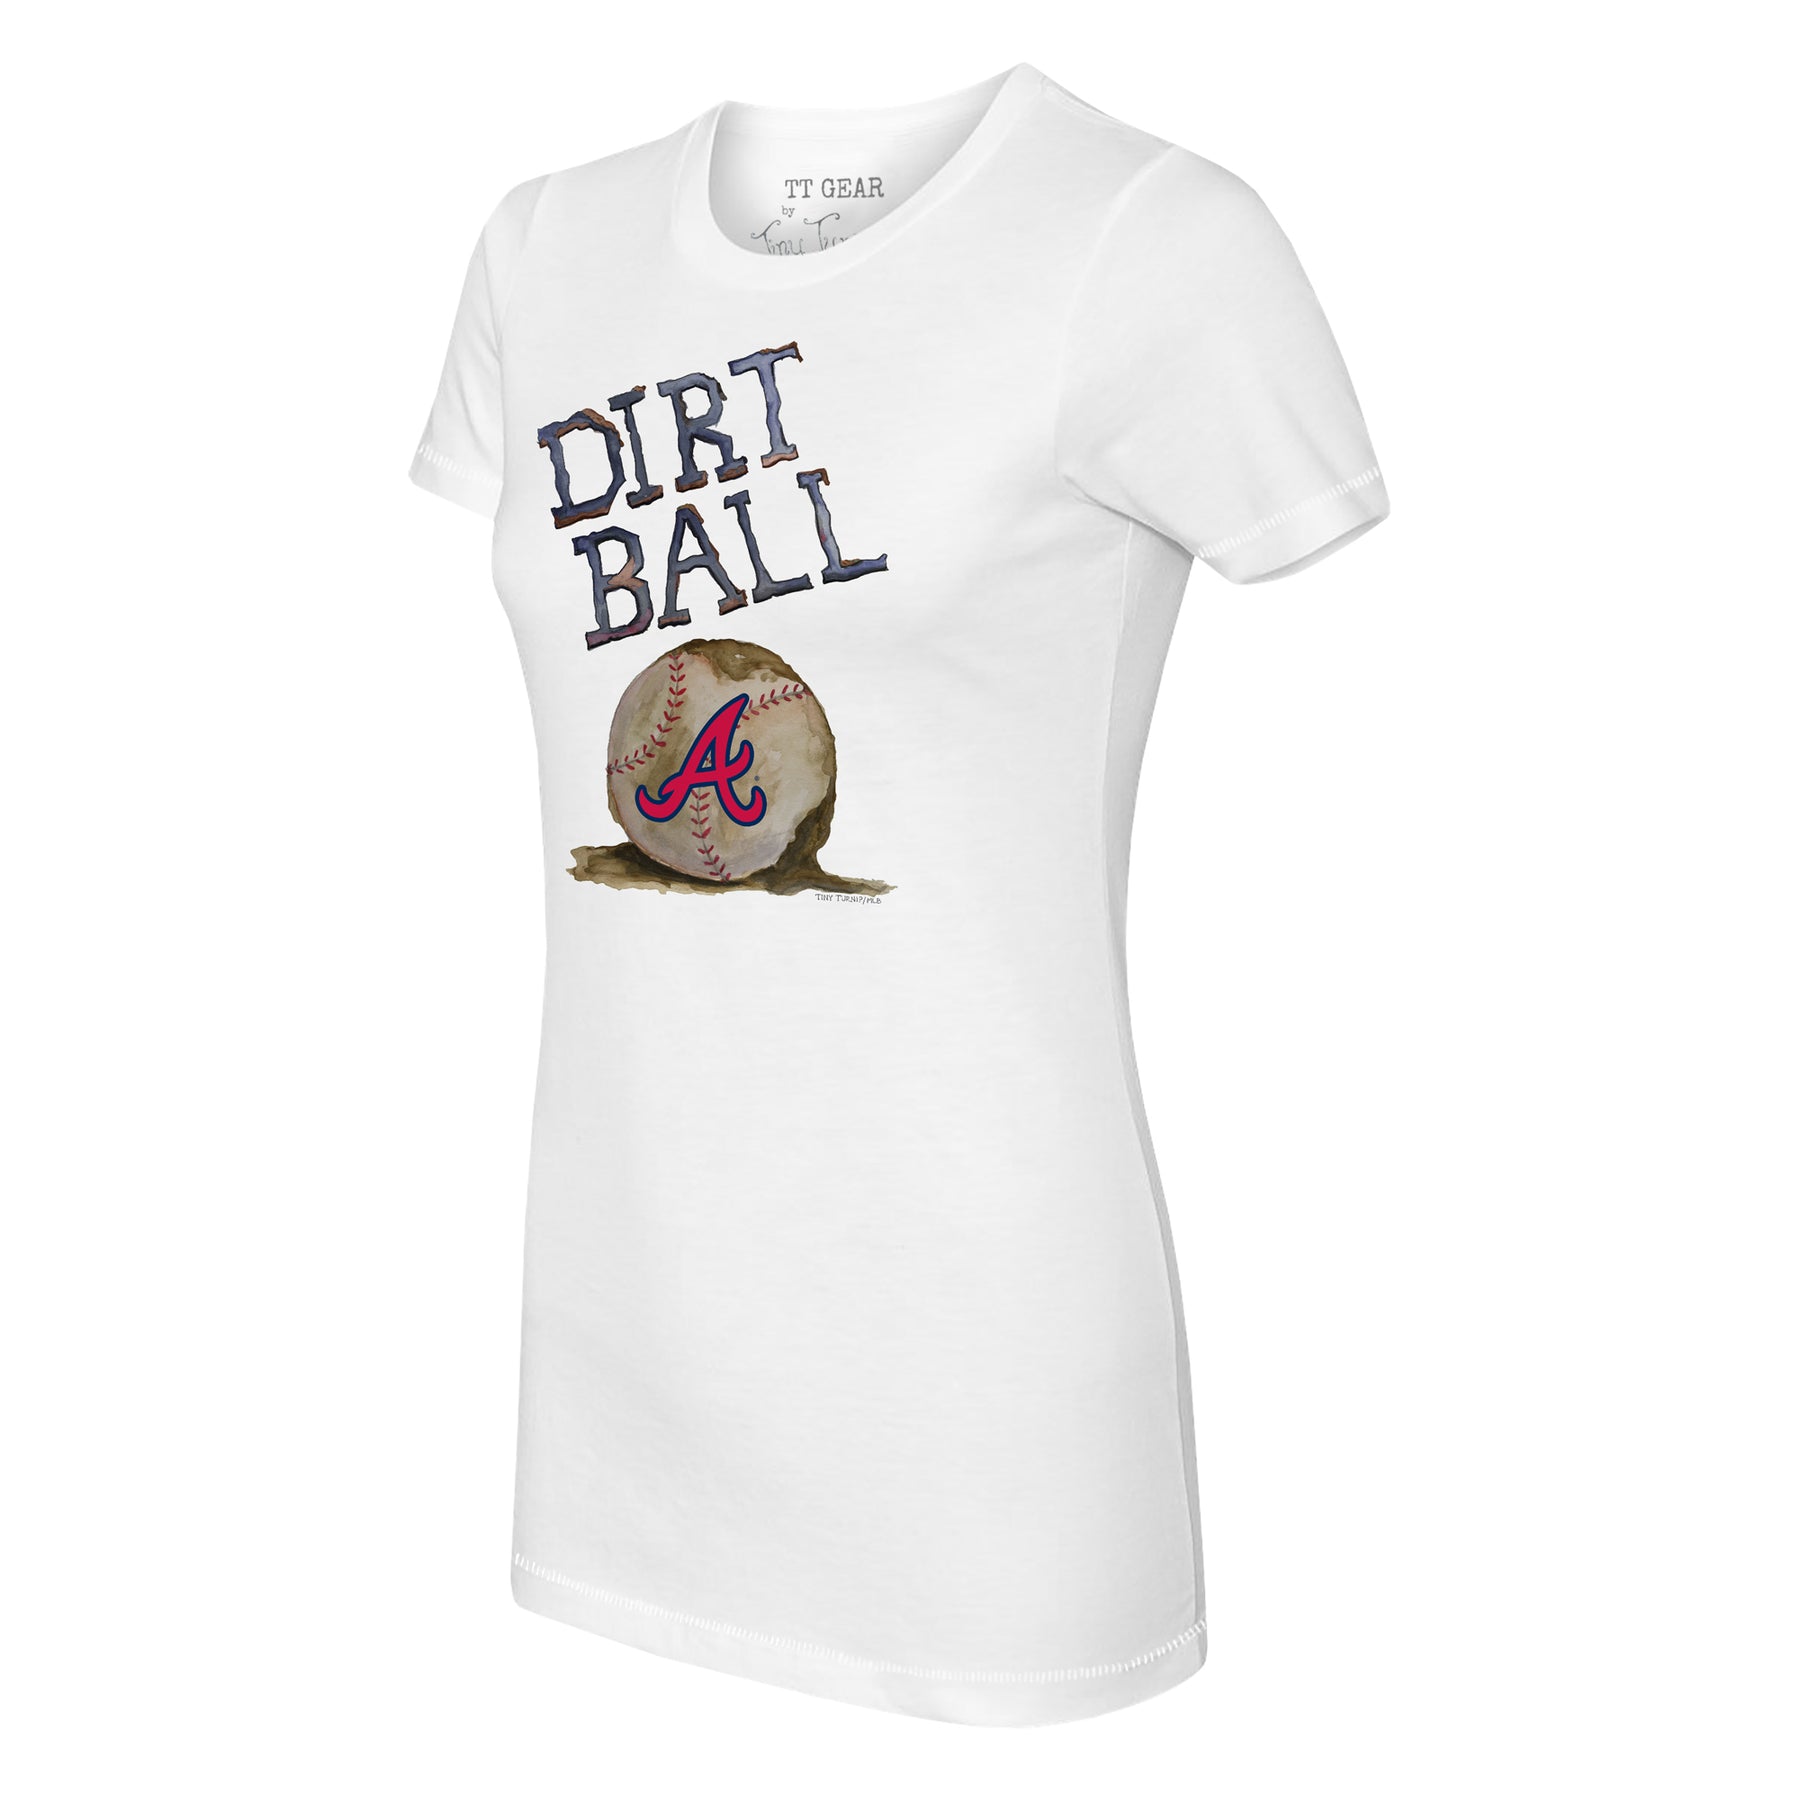 Toddler Tiny Turnip Navy Atlanta Braves Stitched Baseball T-Shirt Size:3T